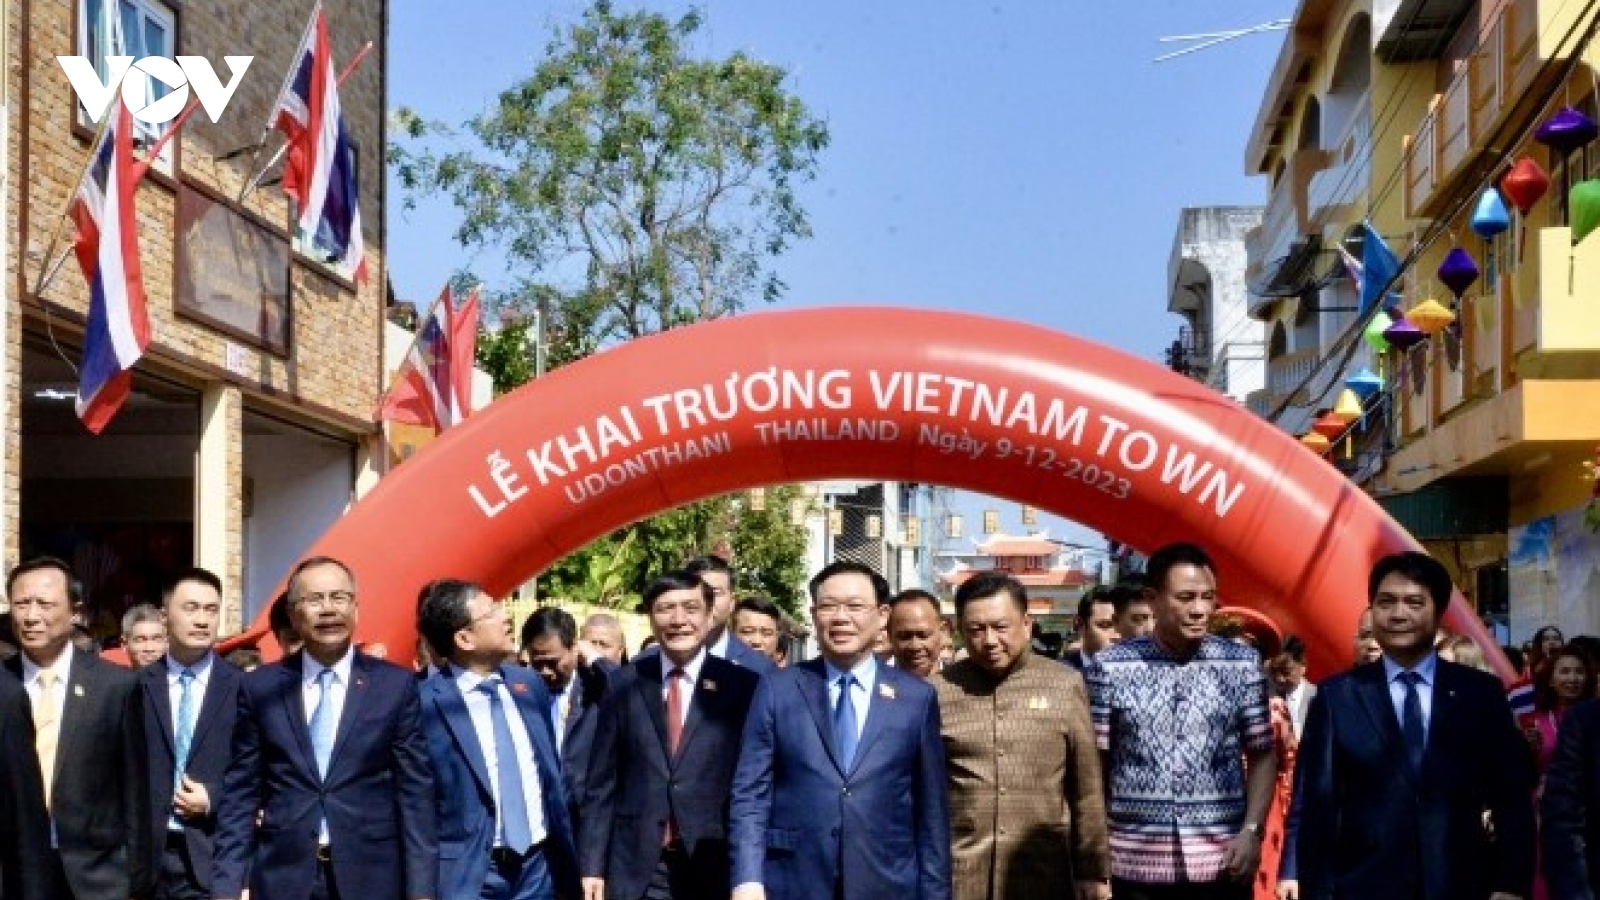 Top Vietnamese legislator launches Vietnam Town in Udon Thani province